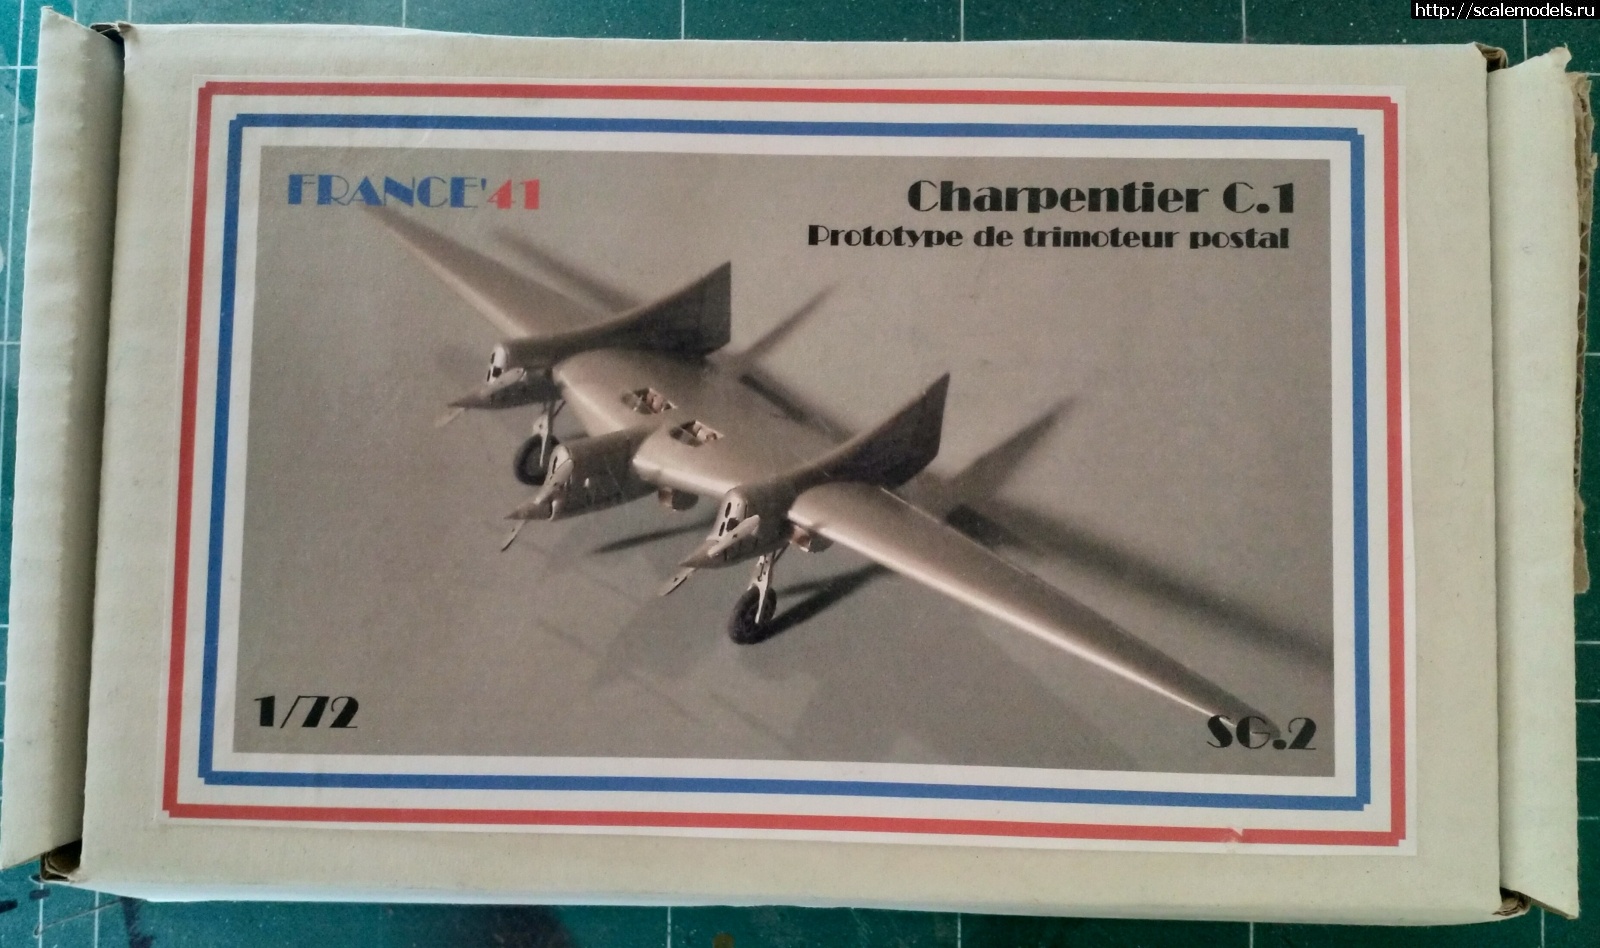 1/72 France 41' Charpentier C.I     